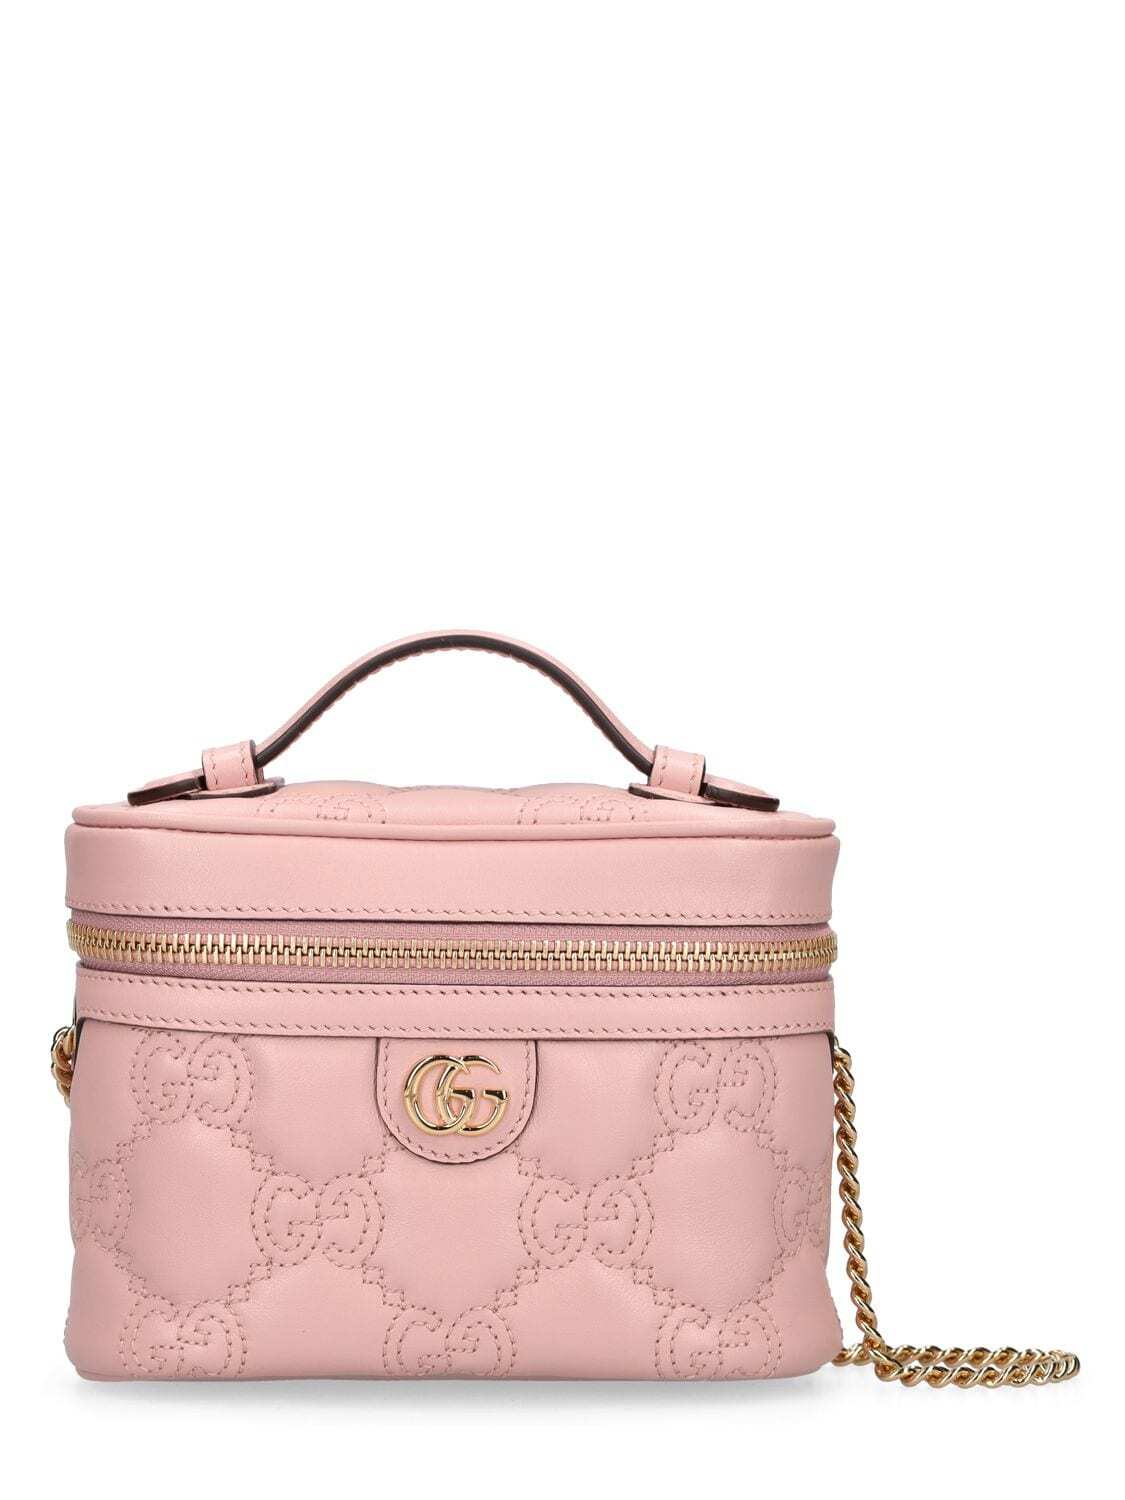 GUCCI Matelassé Leather Top Handle Mini Bag in pink